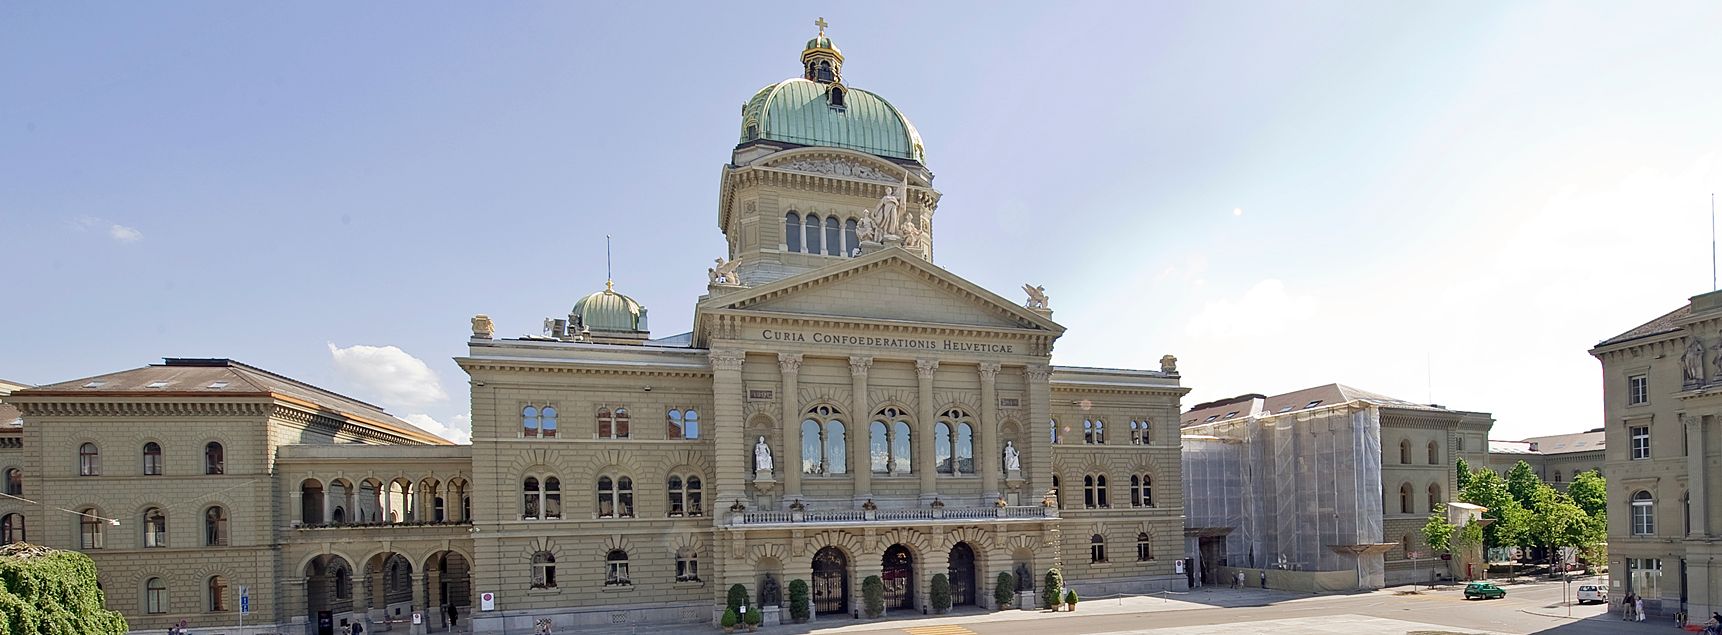 Swiss Parlament